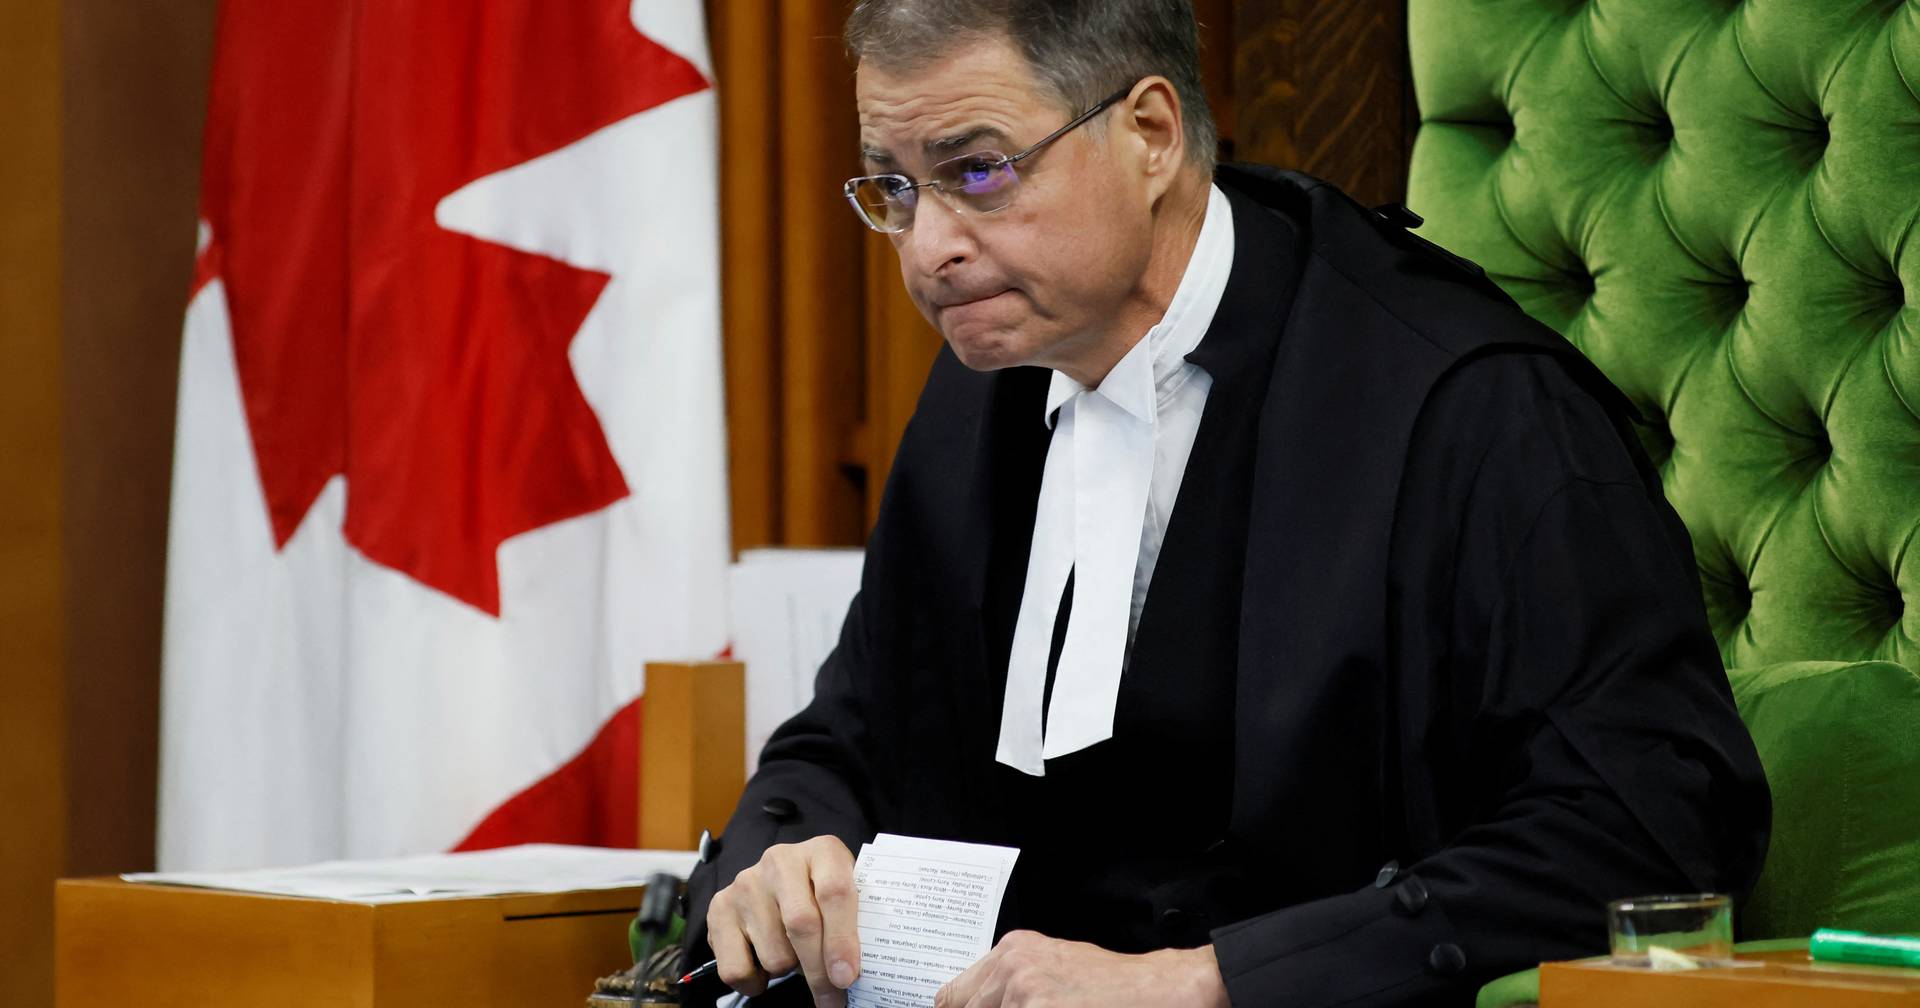 Invitation to Nazi veteran leads Speaker of Canada’s Common House to resign